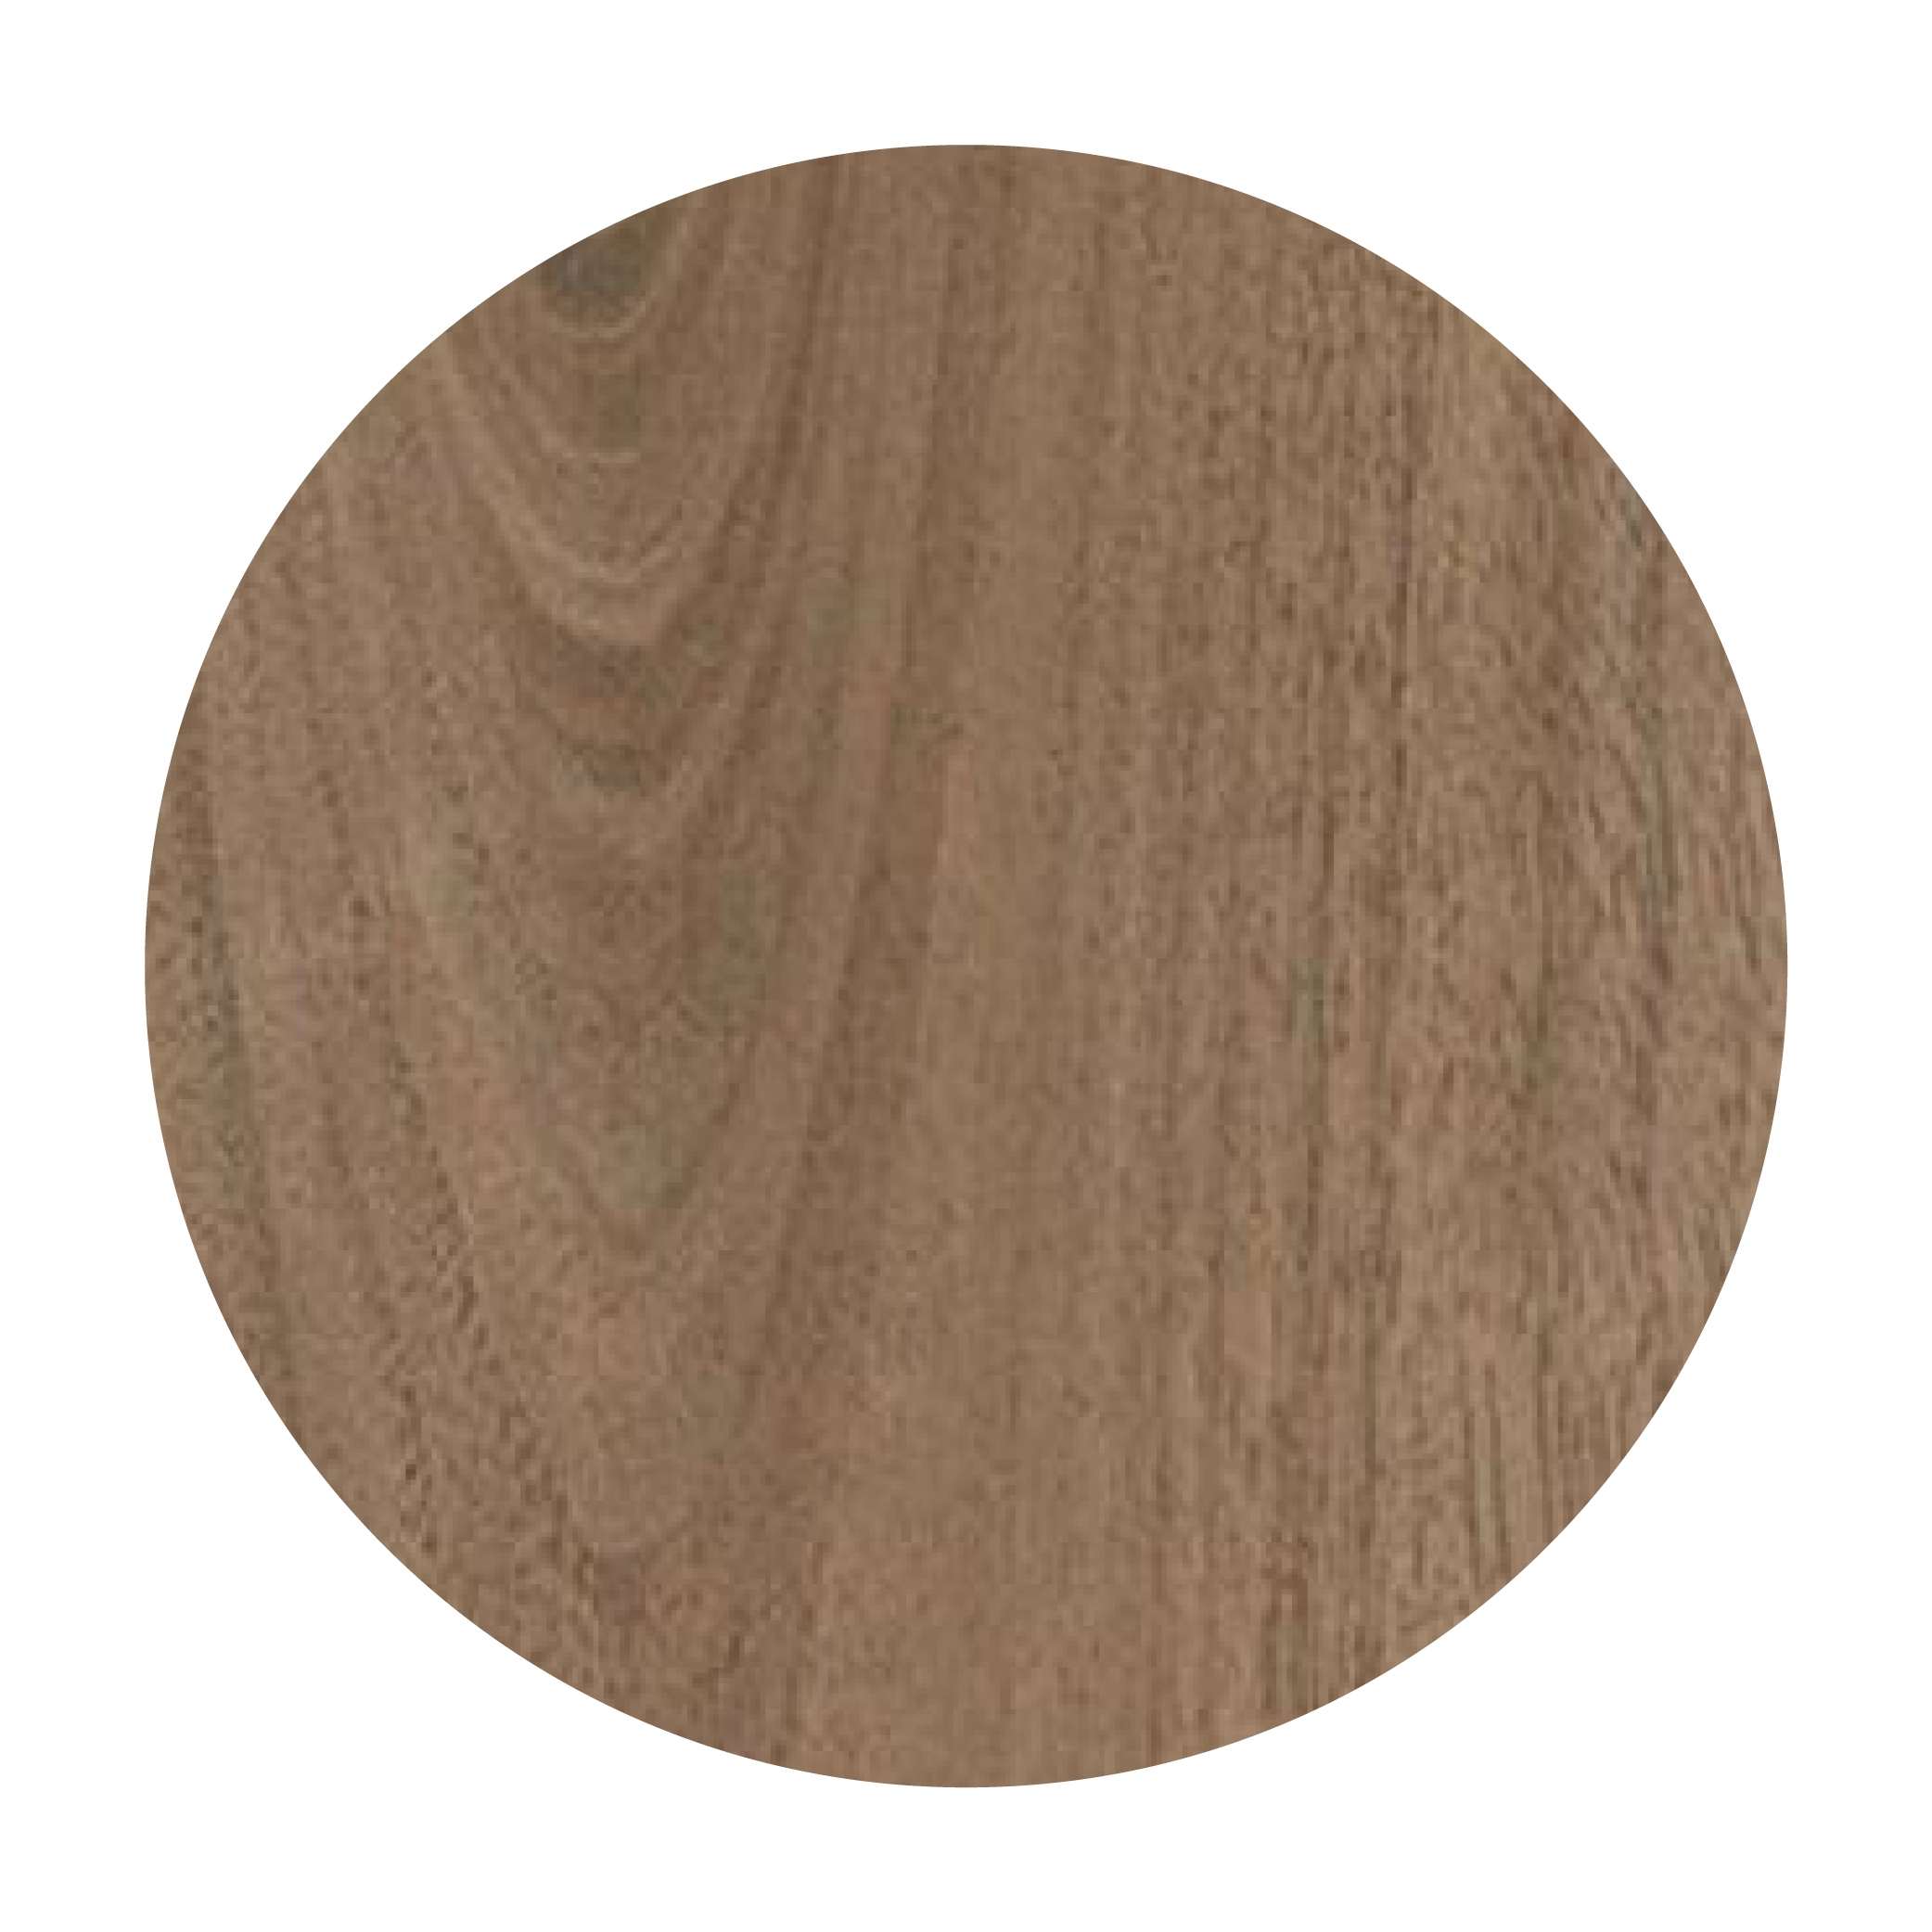 Image of U-Install-It Kitchens Cabinetry colour woodgrain Natural Walnut Flint